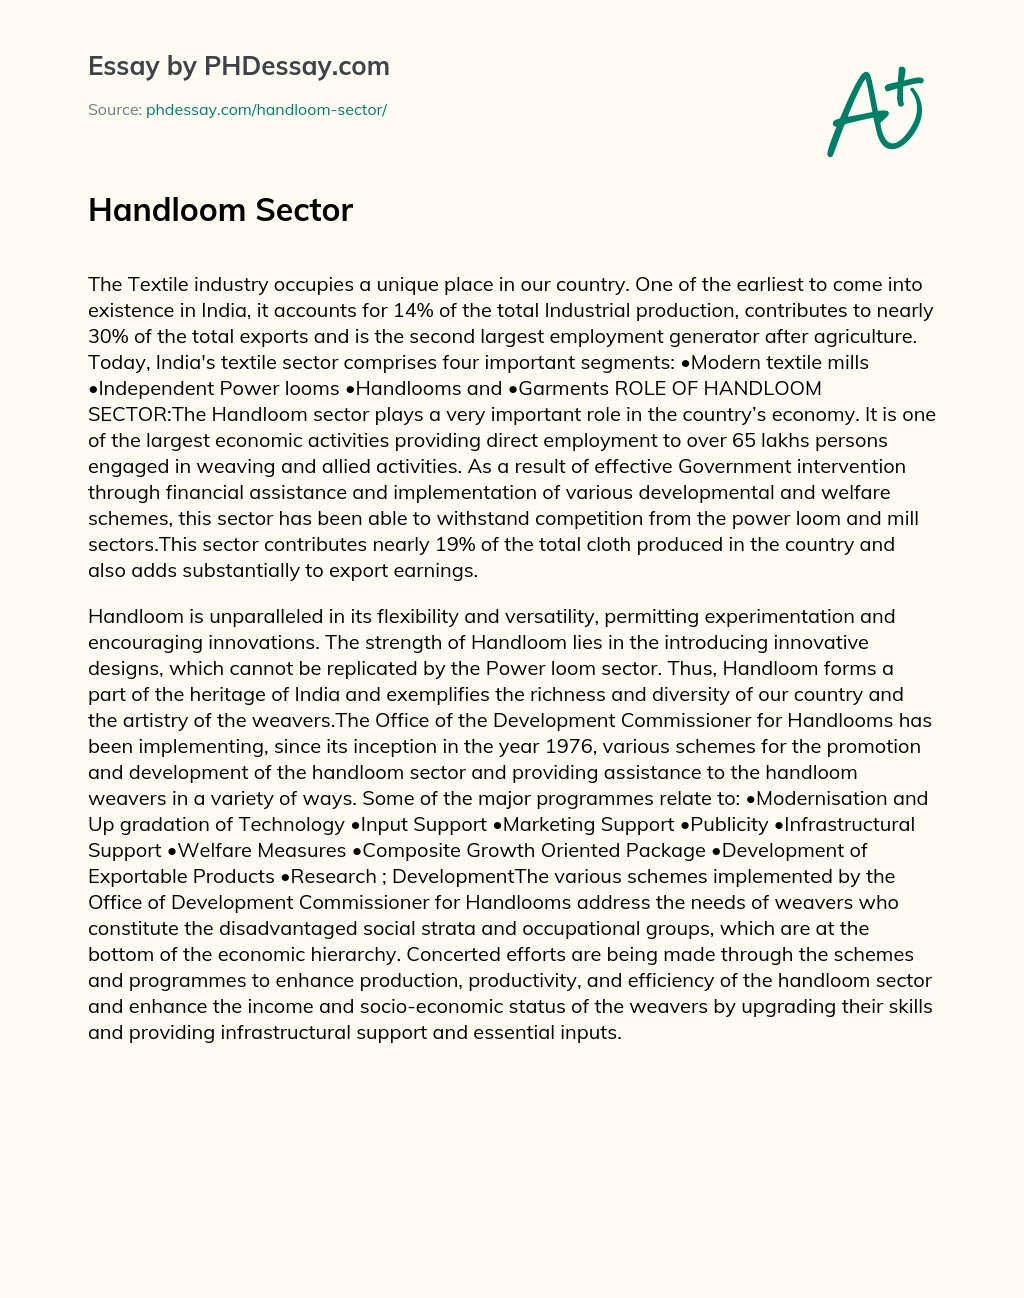 Handloom Sector essay